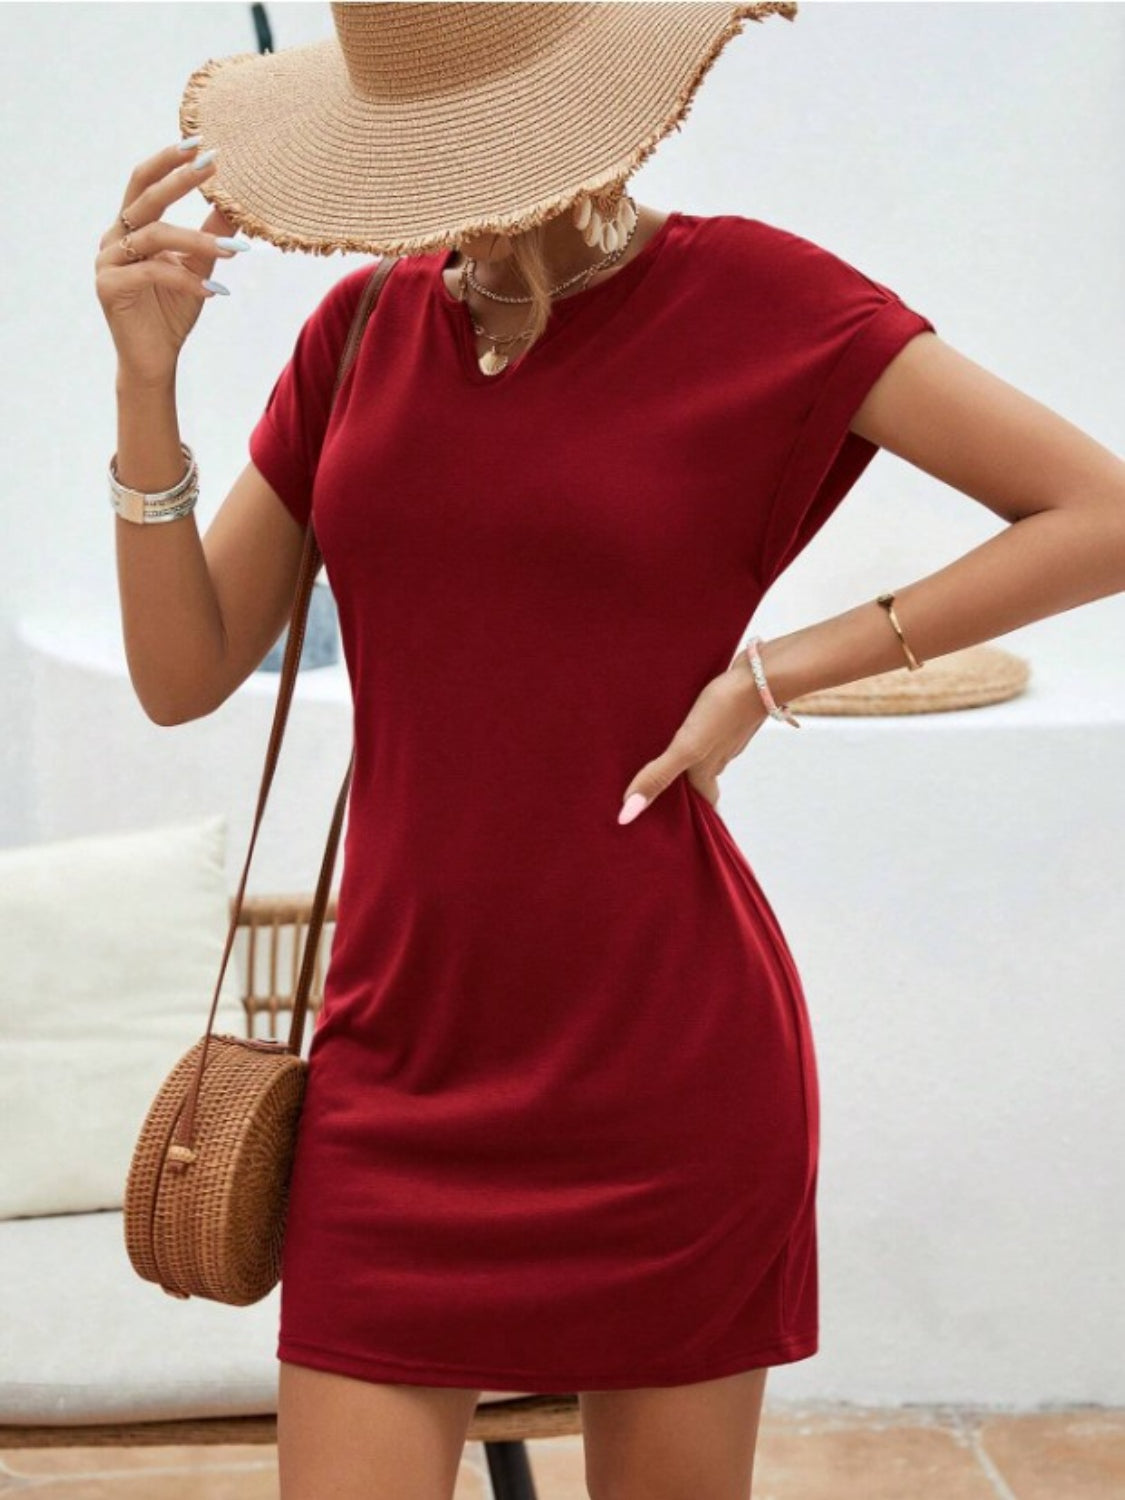 TEEK - Notched Short Sleeve Mini Tee Dress DRESS TEEK Trend Burgundy S 